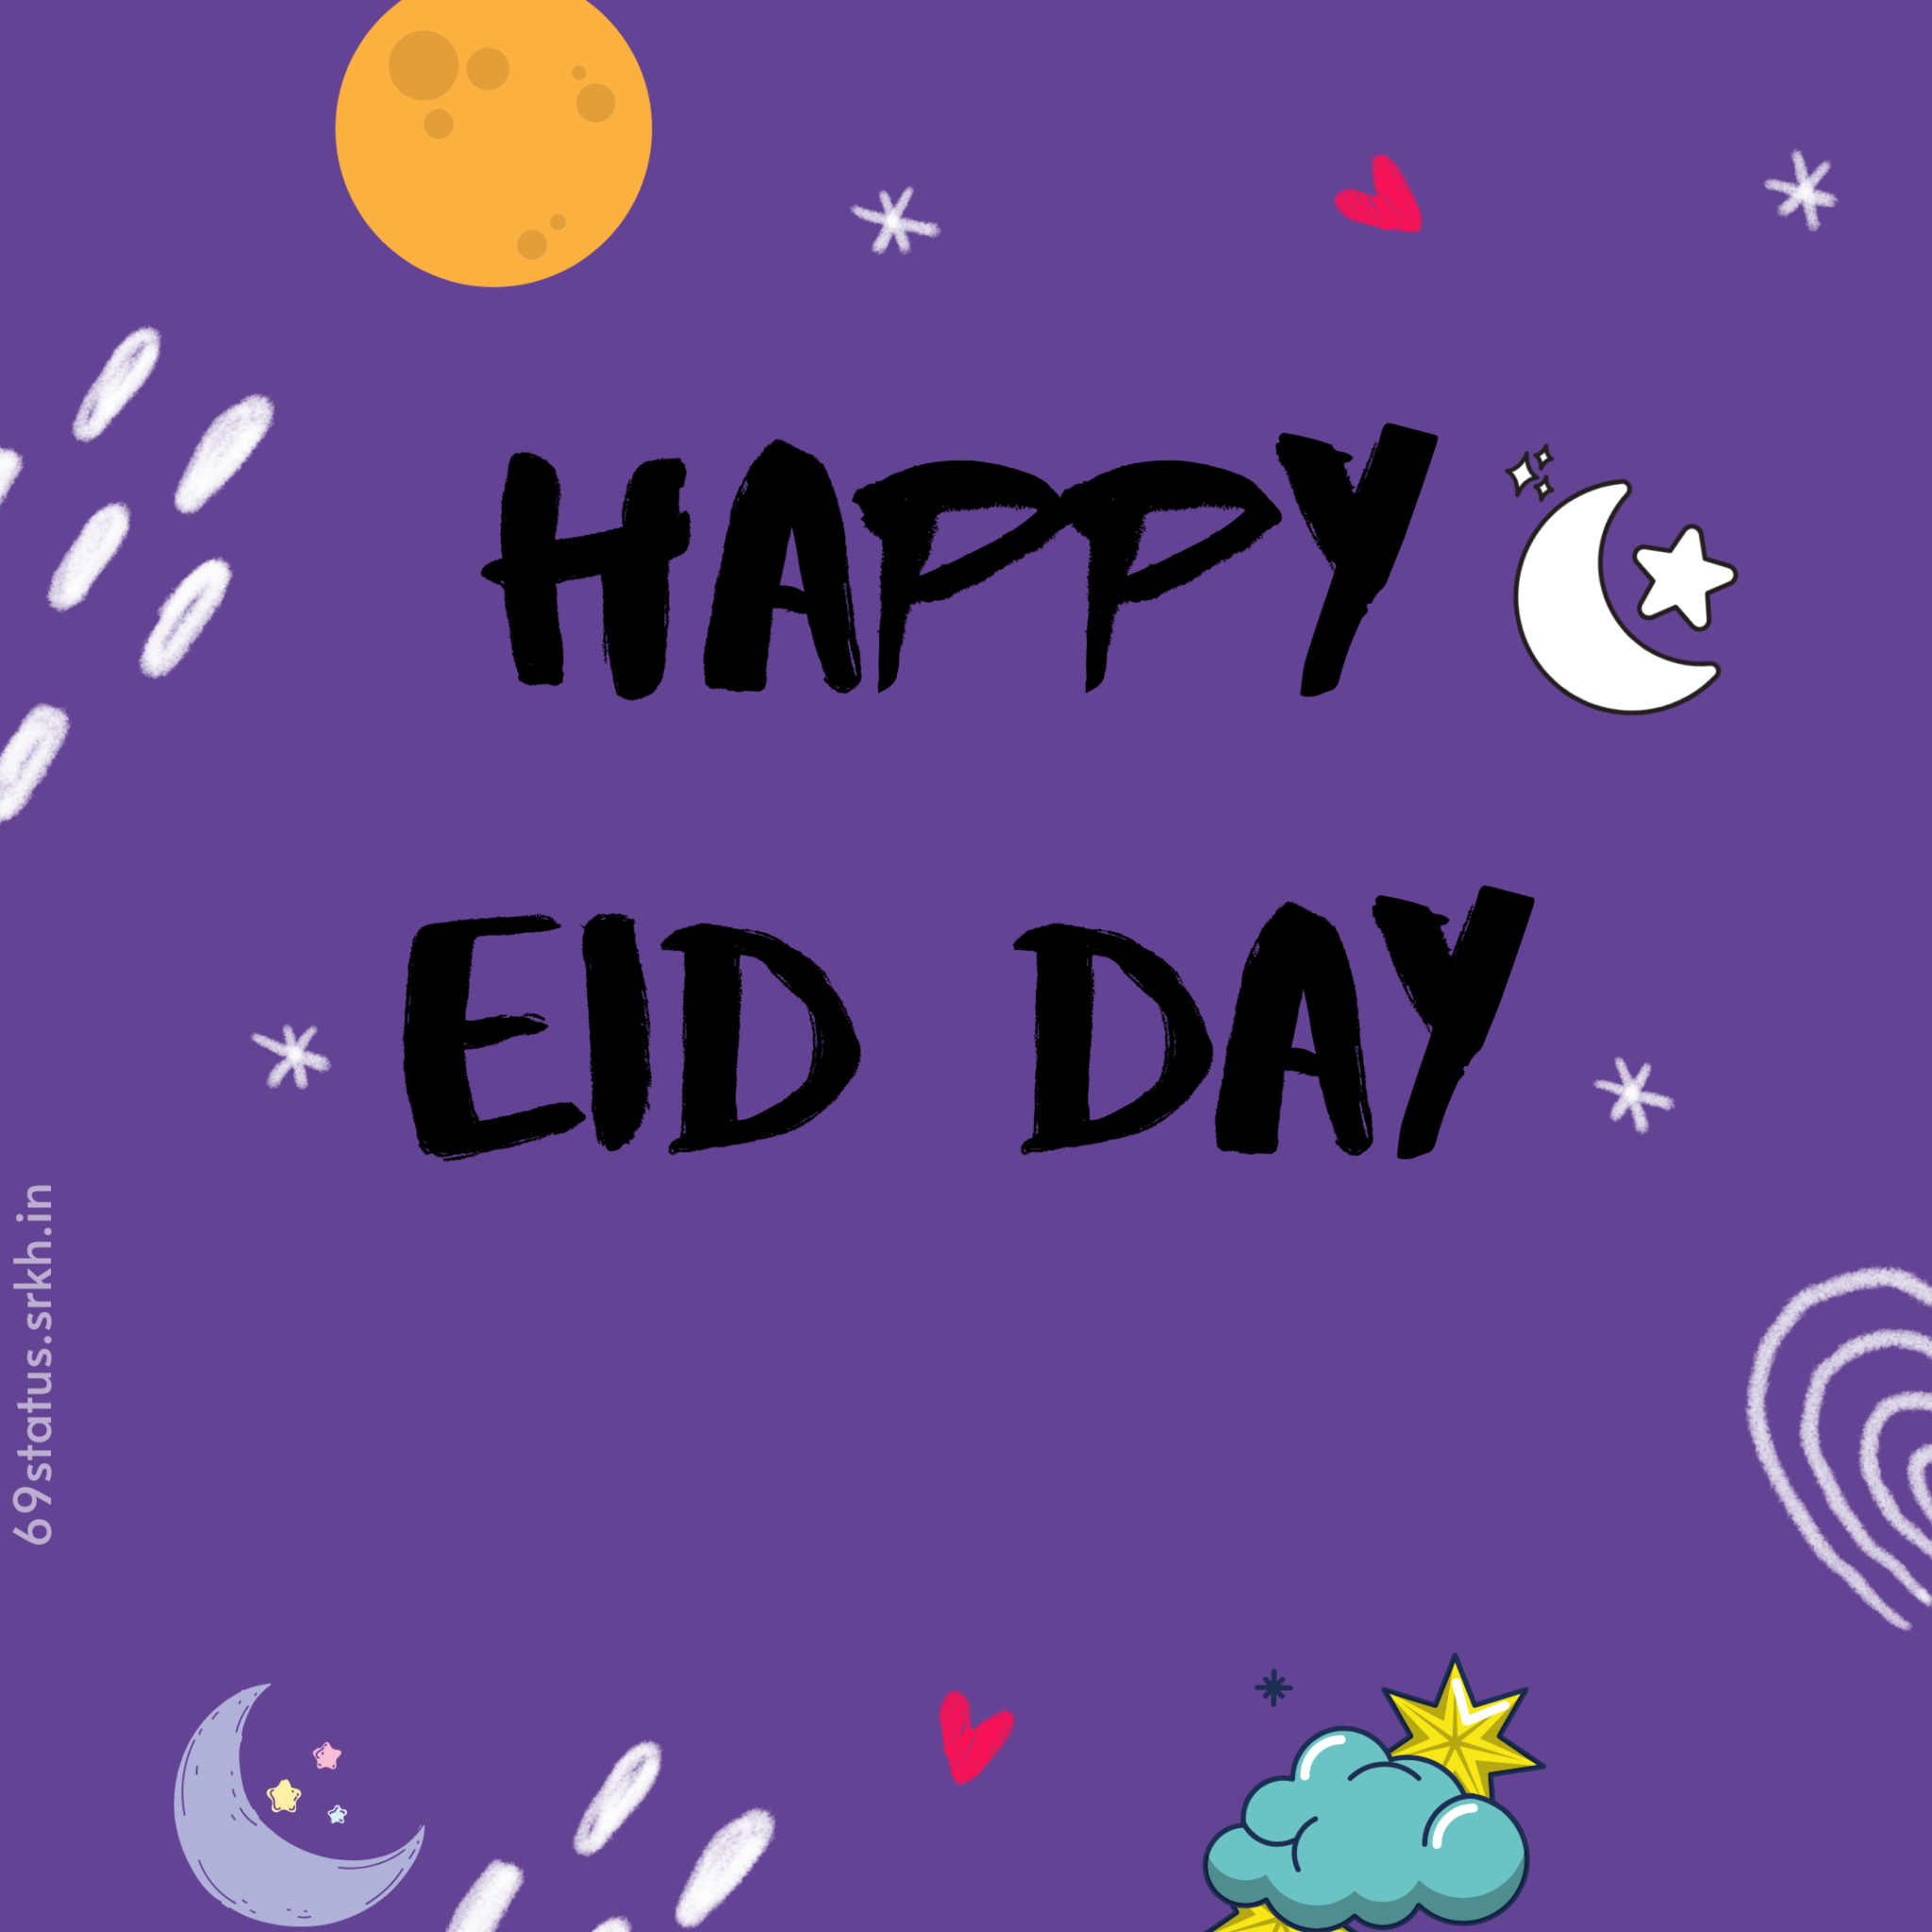 Happy Eid day image hd